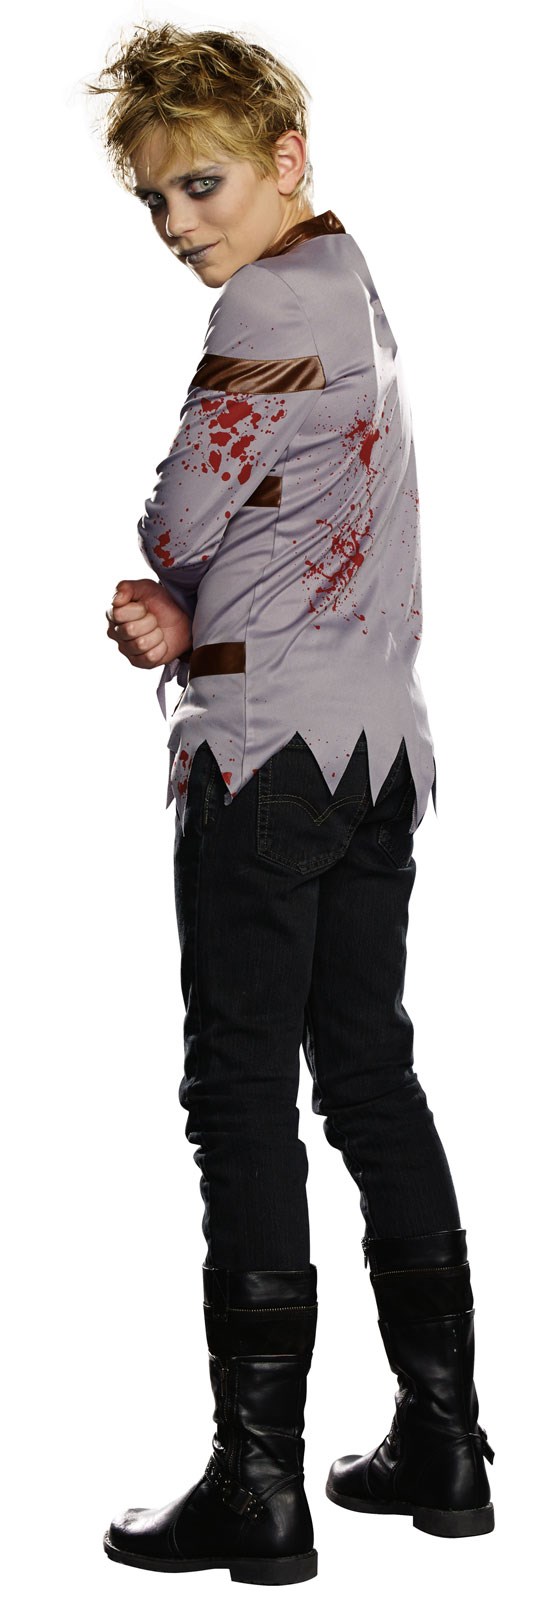 Straightjacket Zombie Kids Costume | BuyCostumes.com